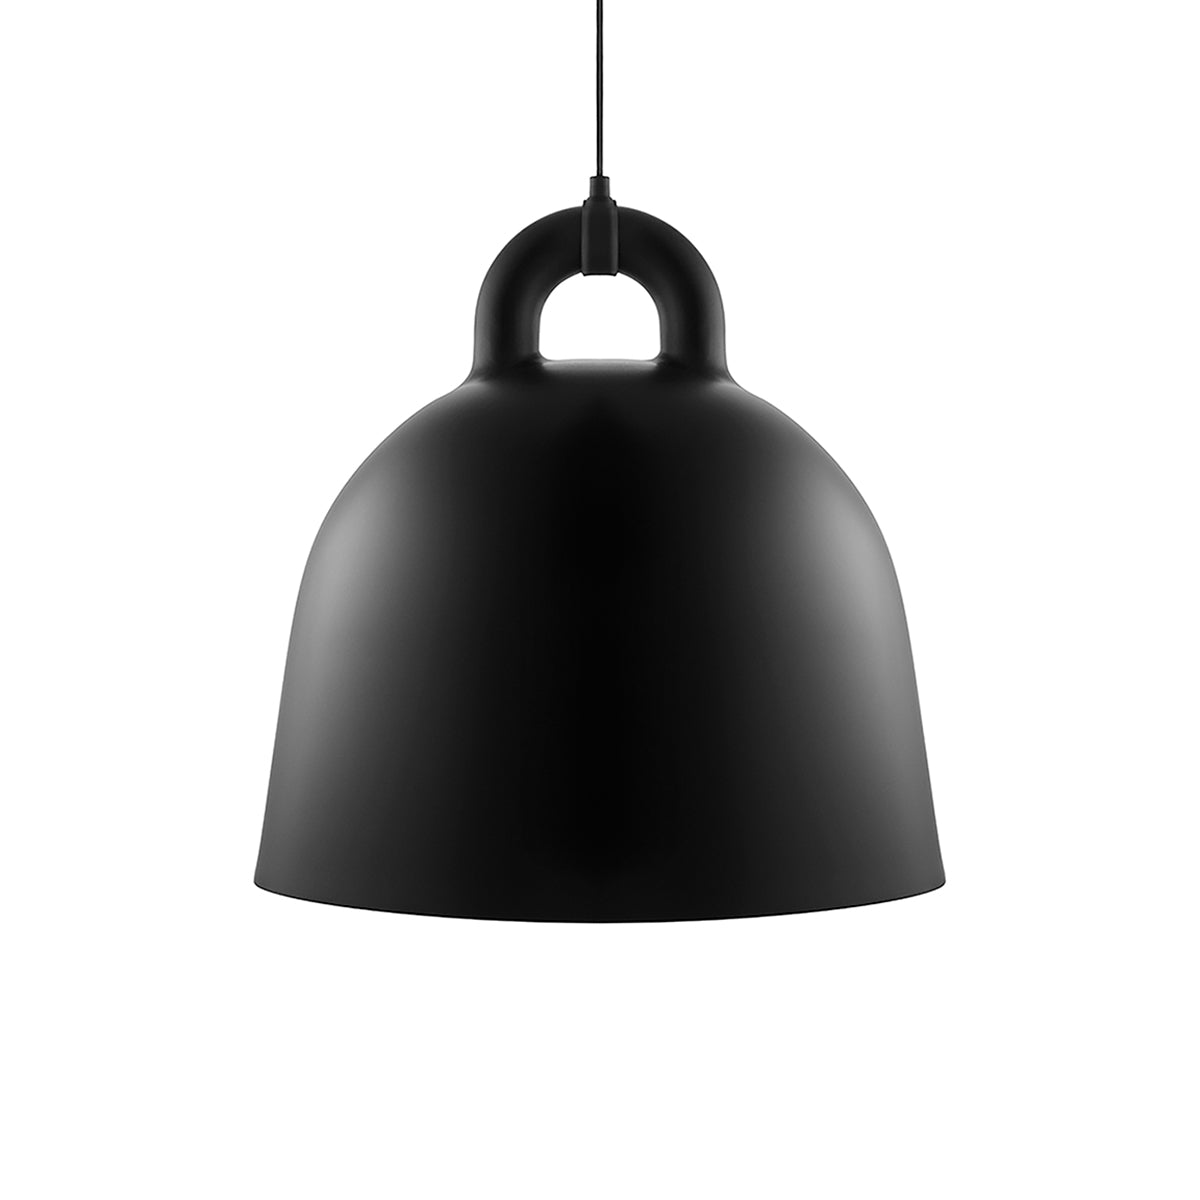 Bell Lamp Large Black